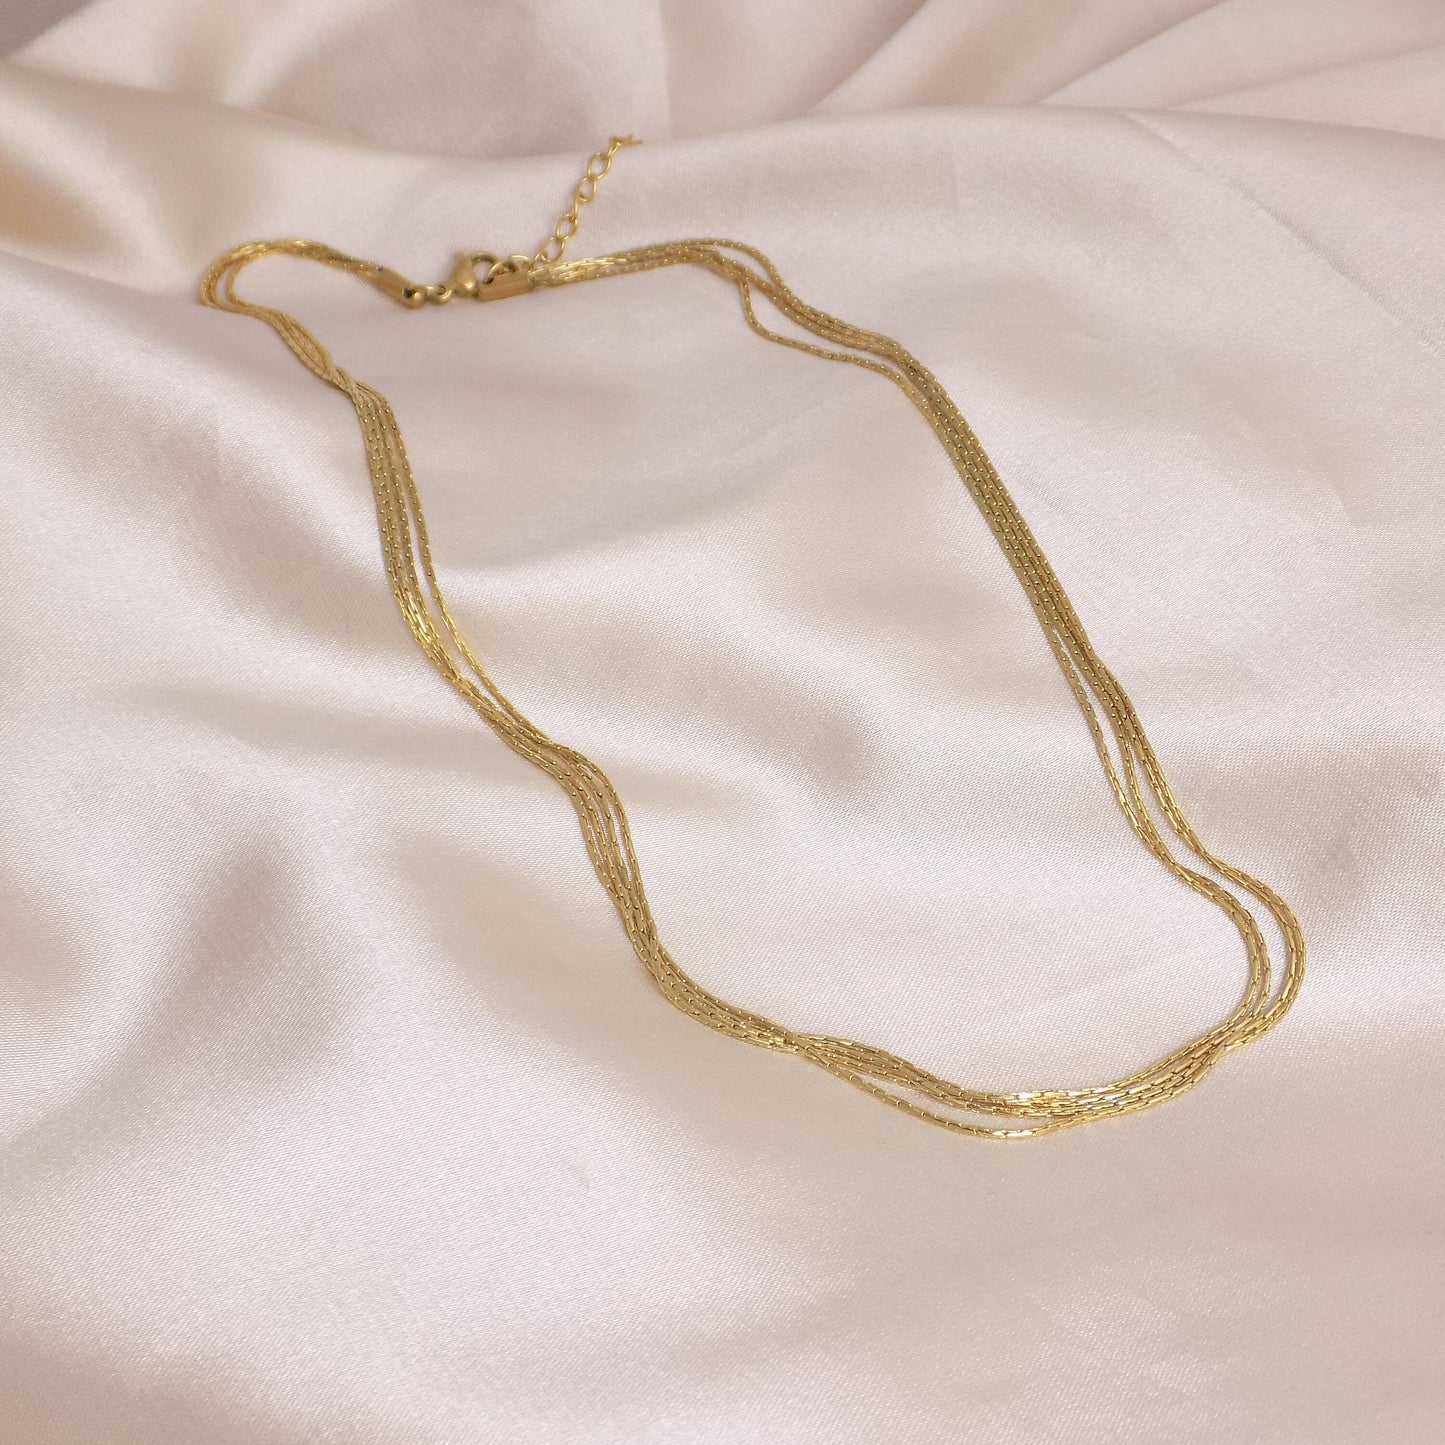 Unique Four Strand Gold Choker For Women, Ultra Thin Snake Chain, 18K Gold Stainless Steel, Modern Trendy, M7-112